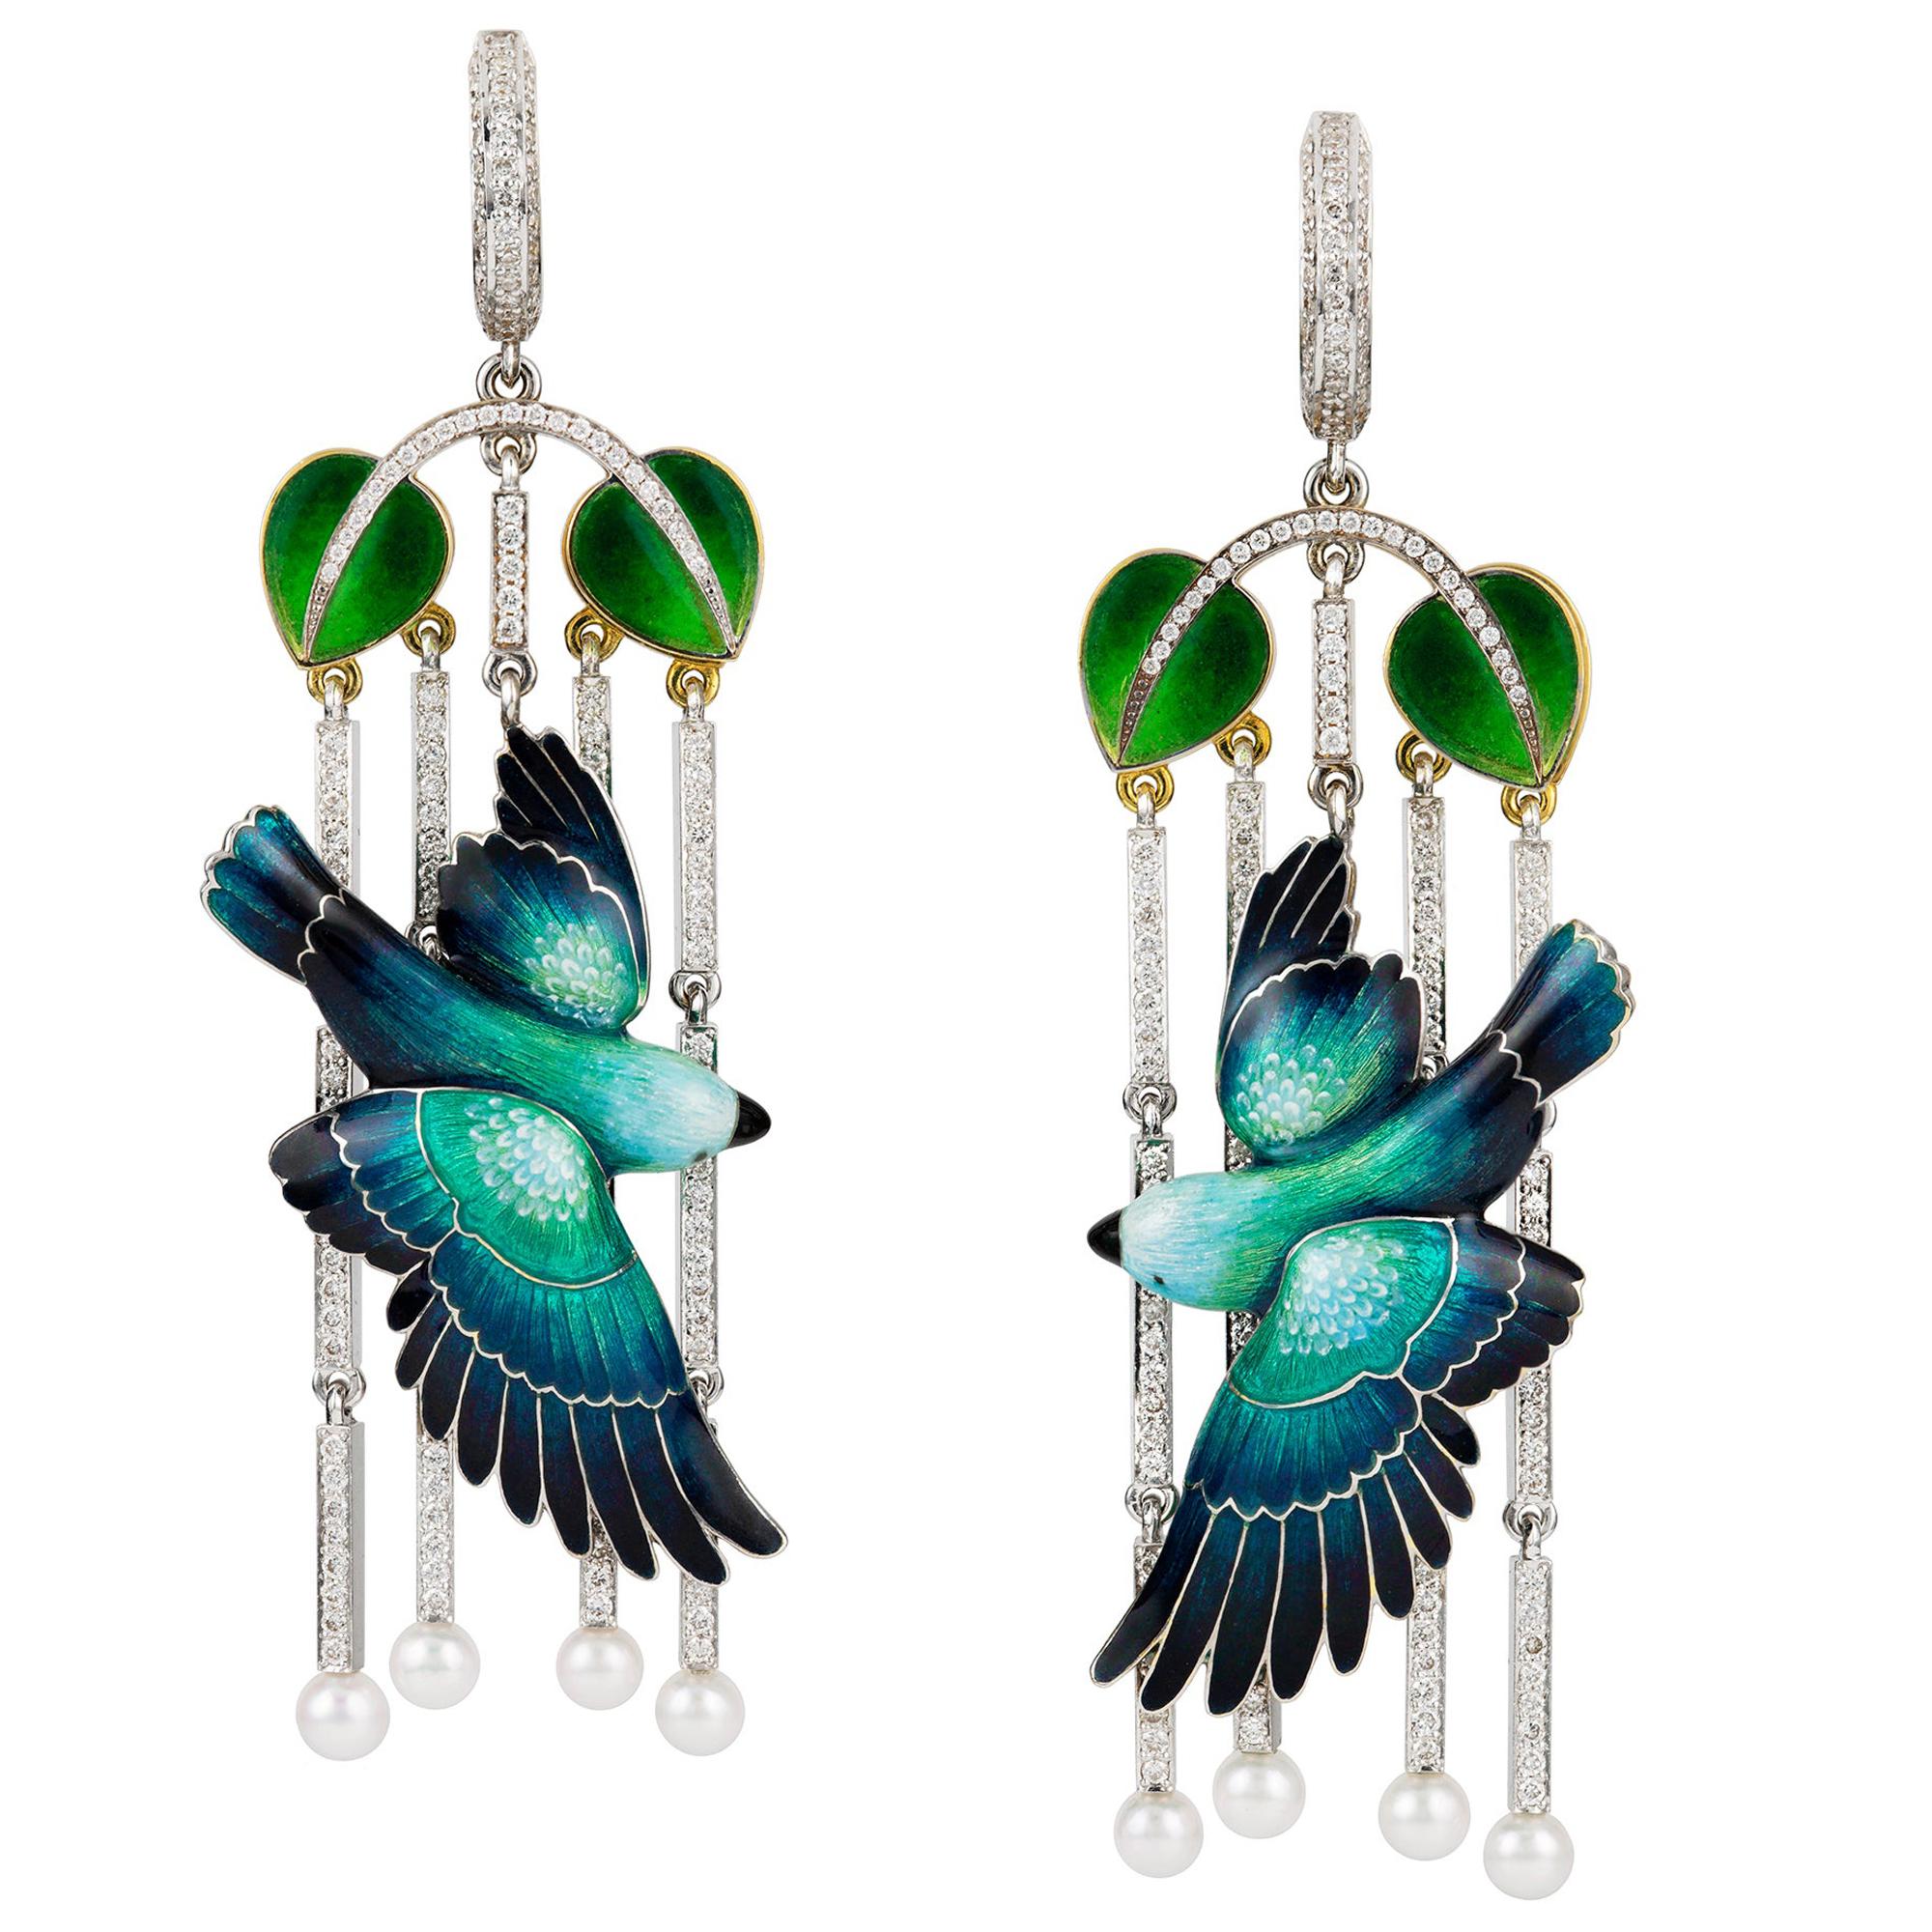 Pair of Parrot Earrings by Ilgiz F